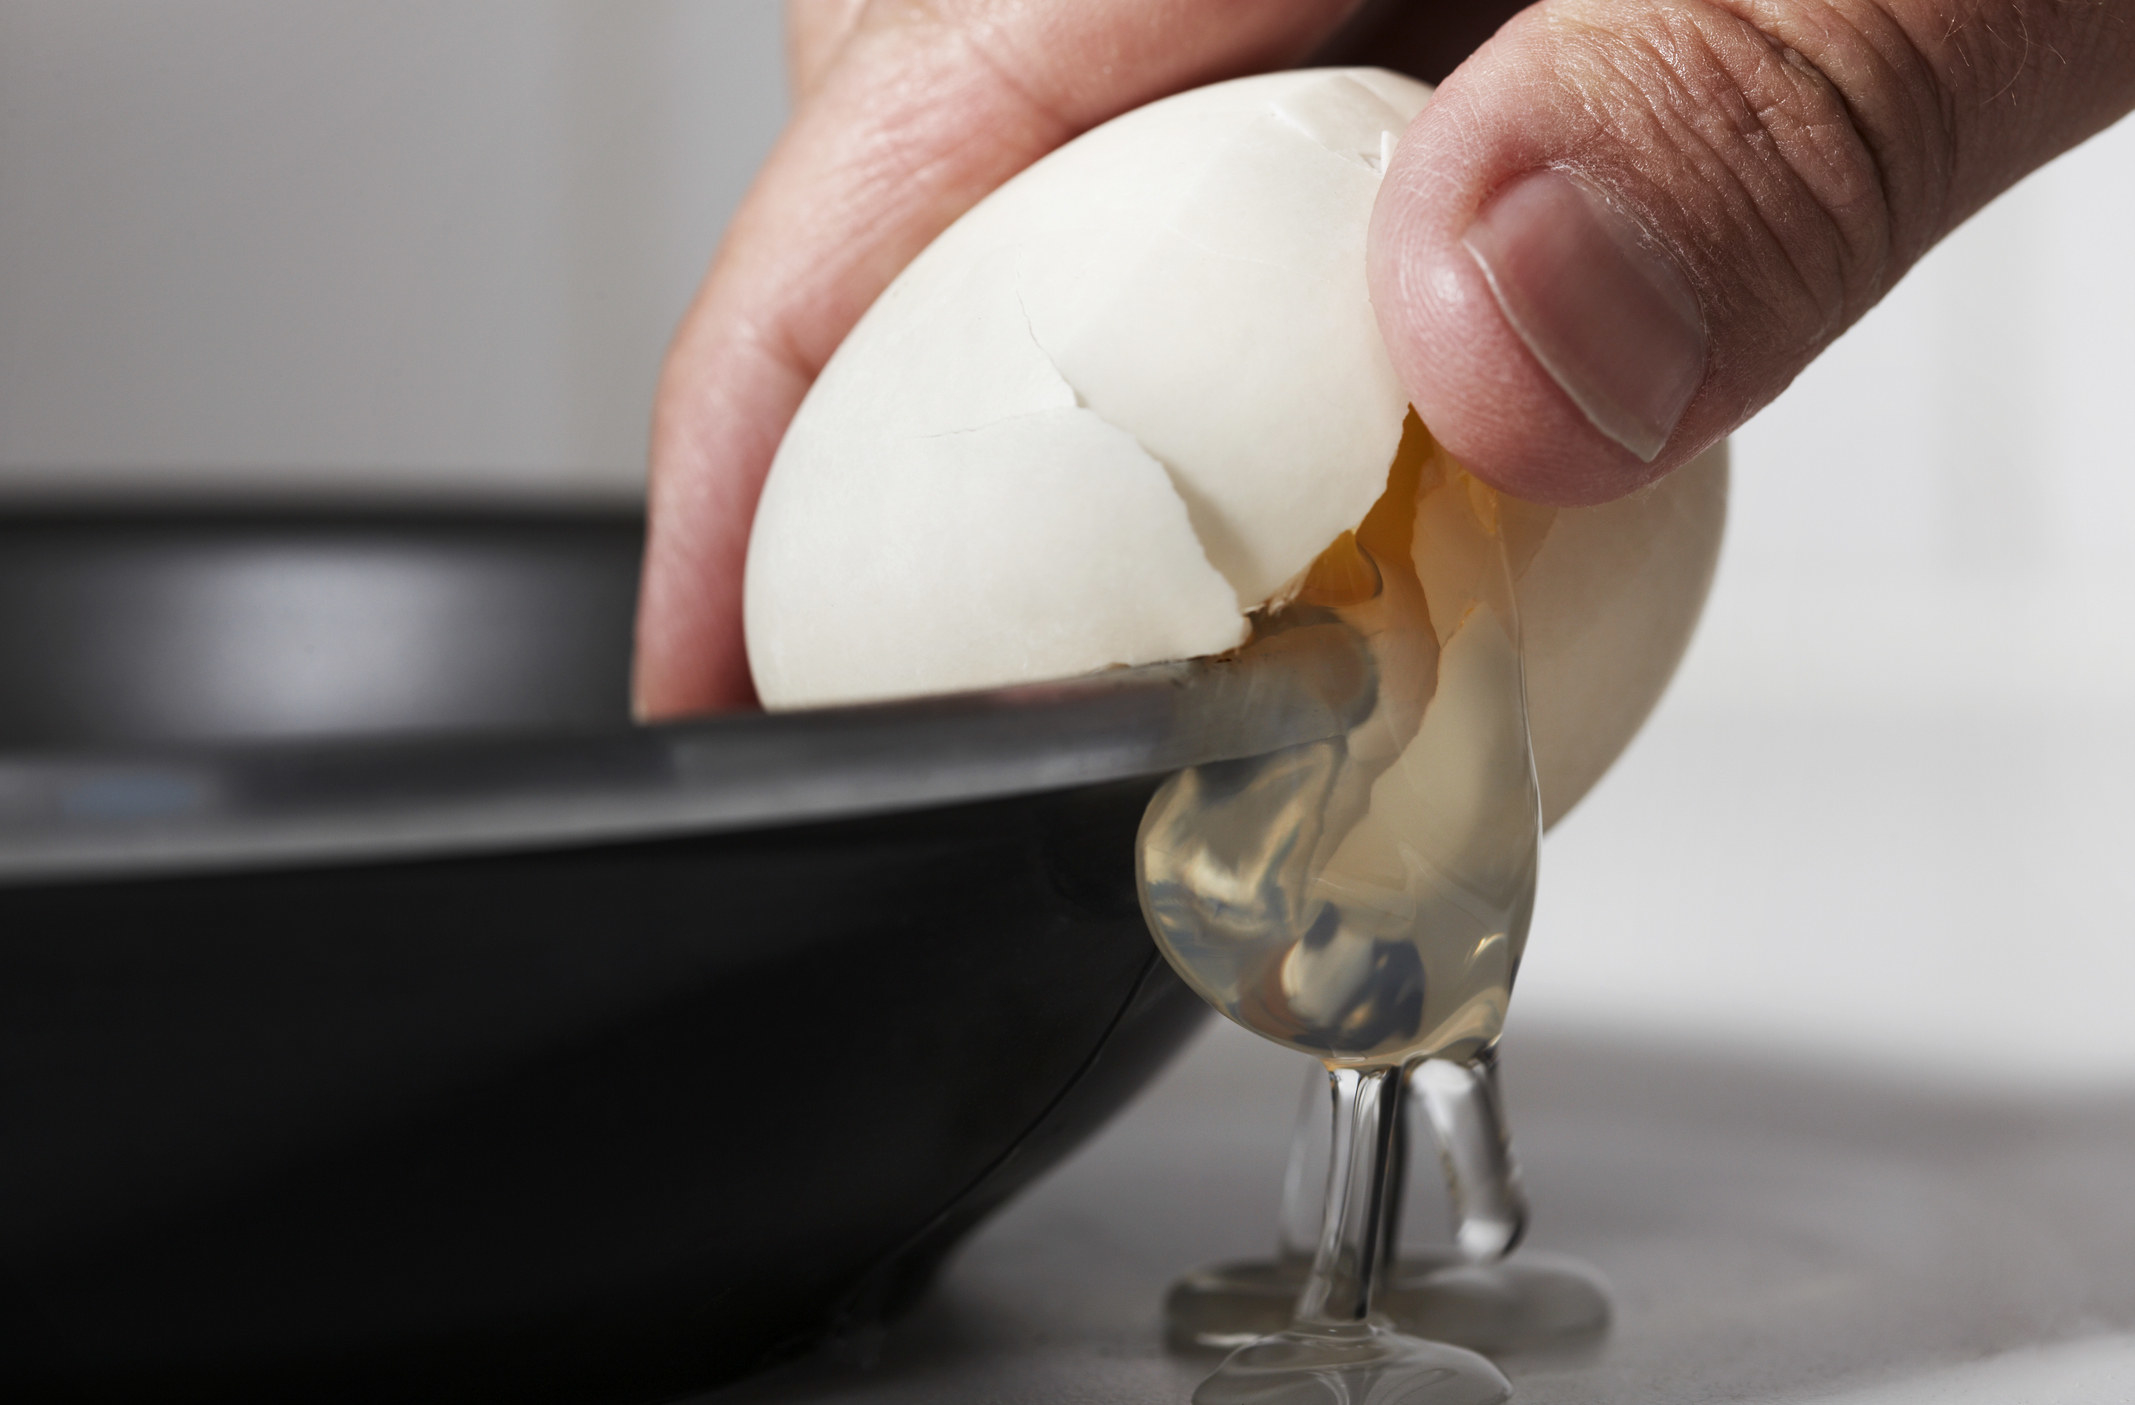 hand cracking an egg against a pan